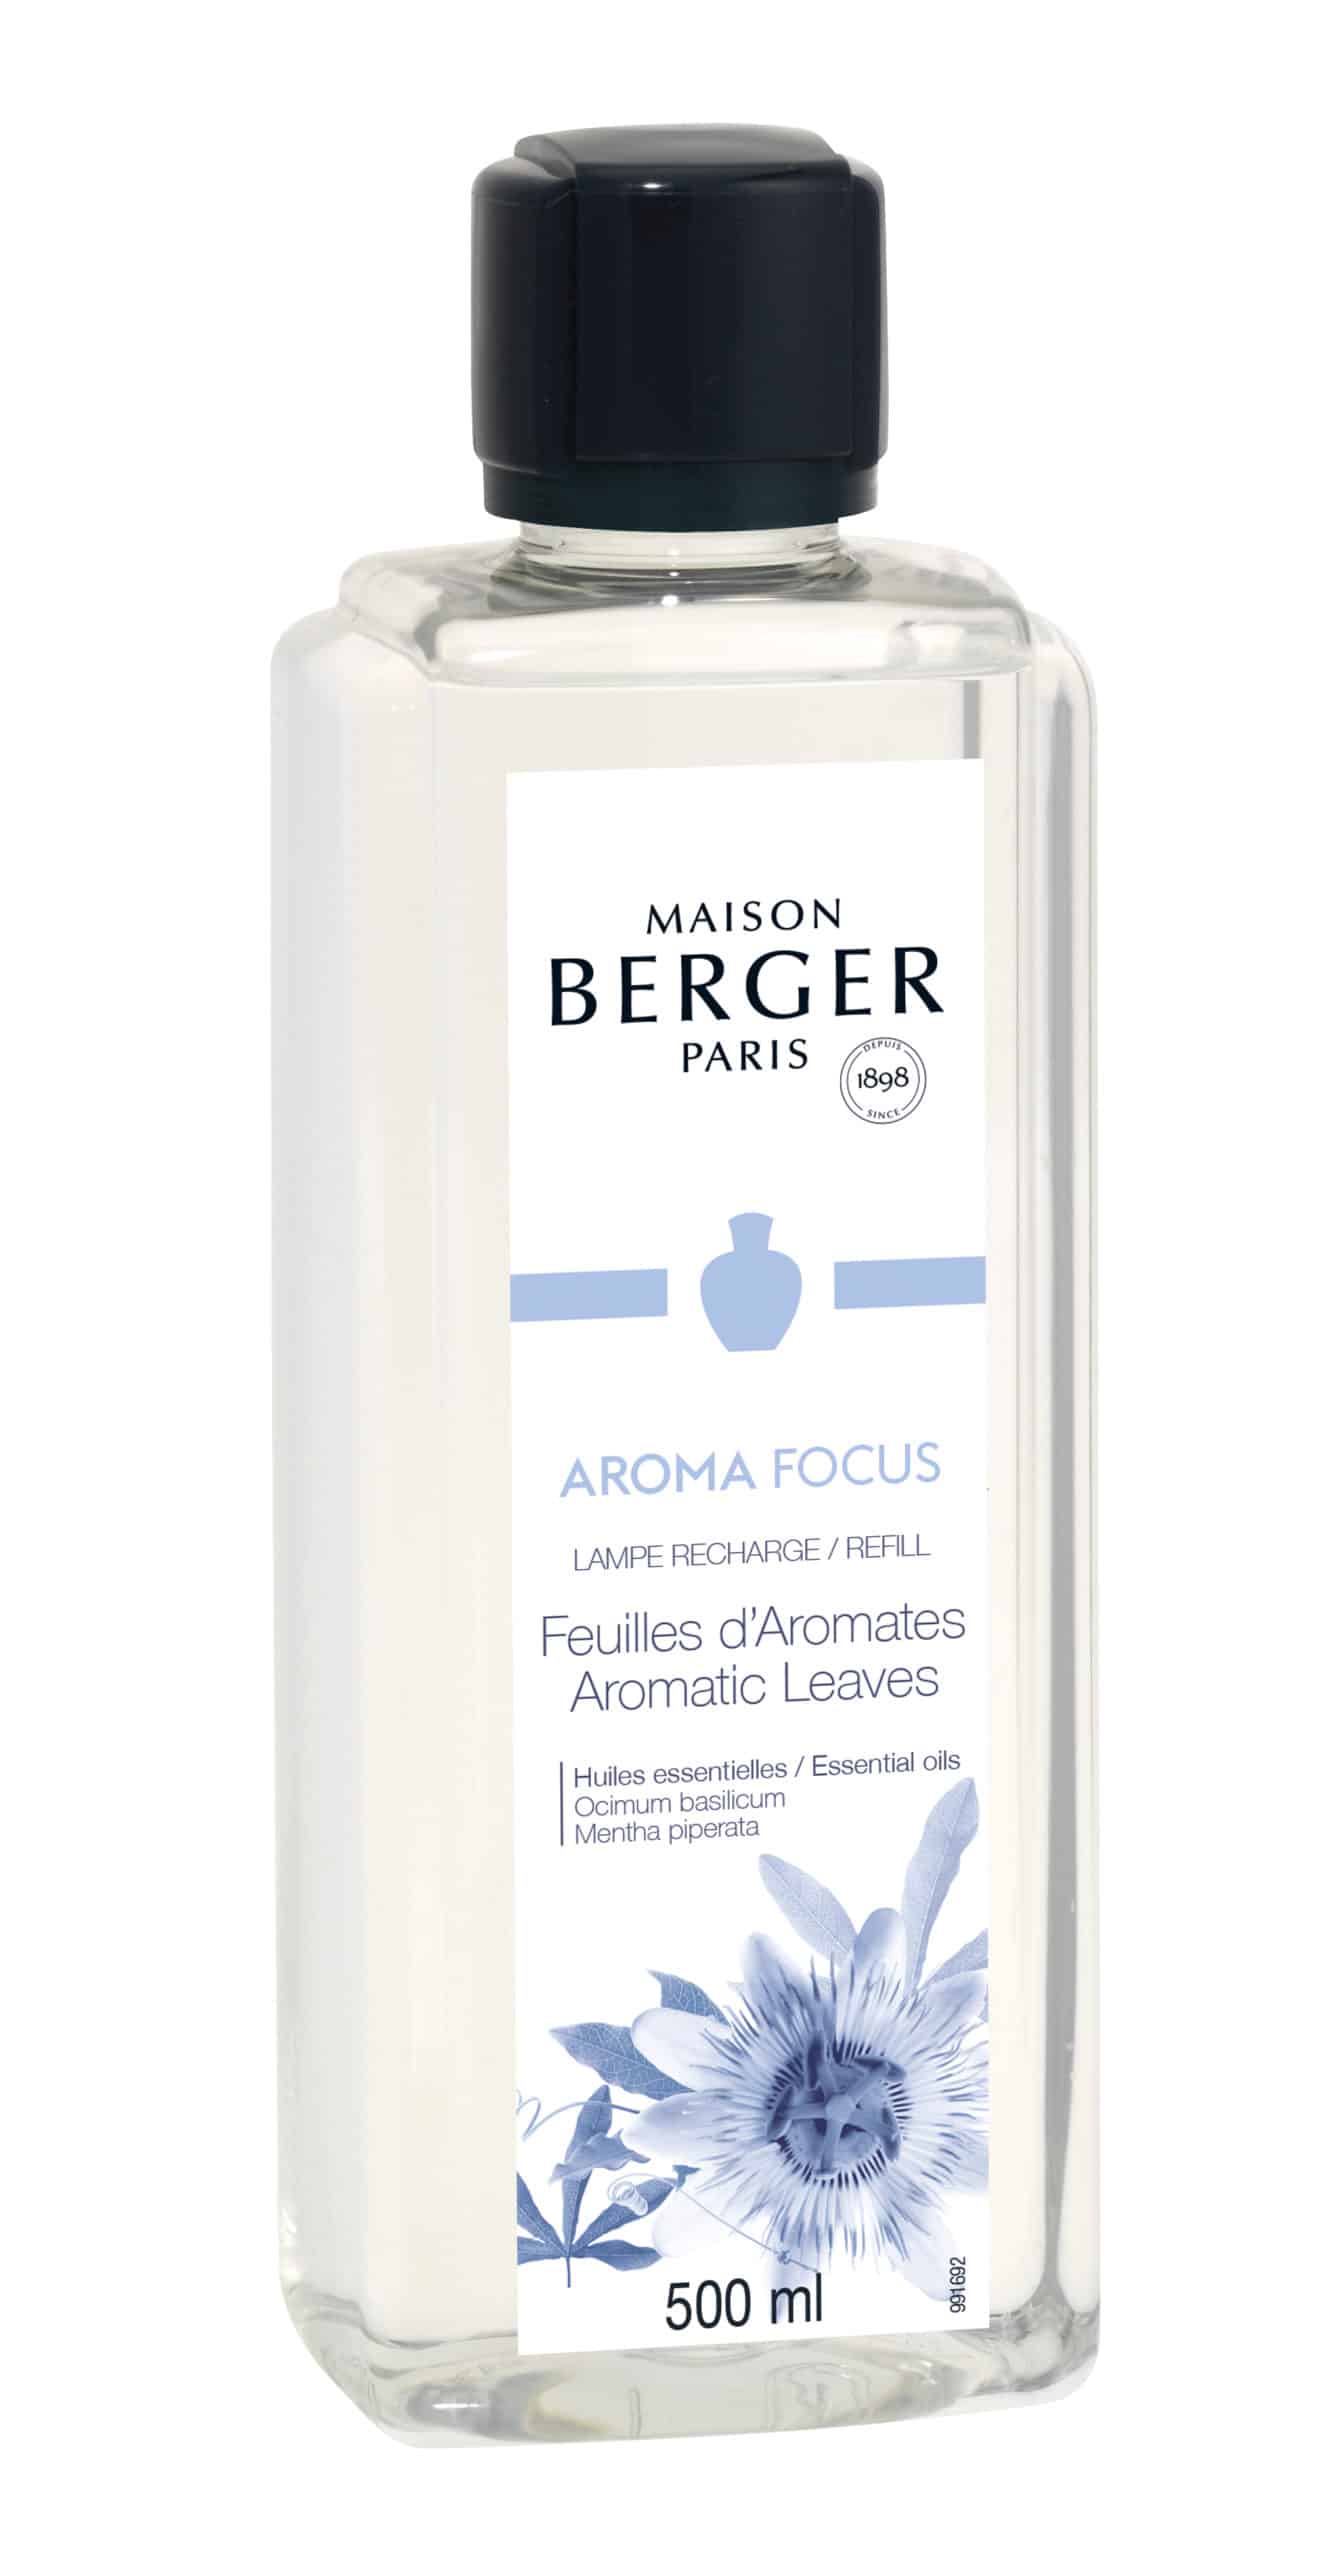 Maison Berger Paris - parfum Aroma Focus - 500 ml